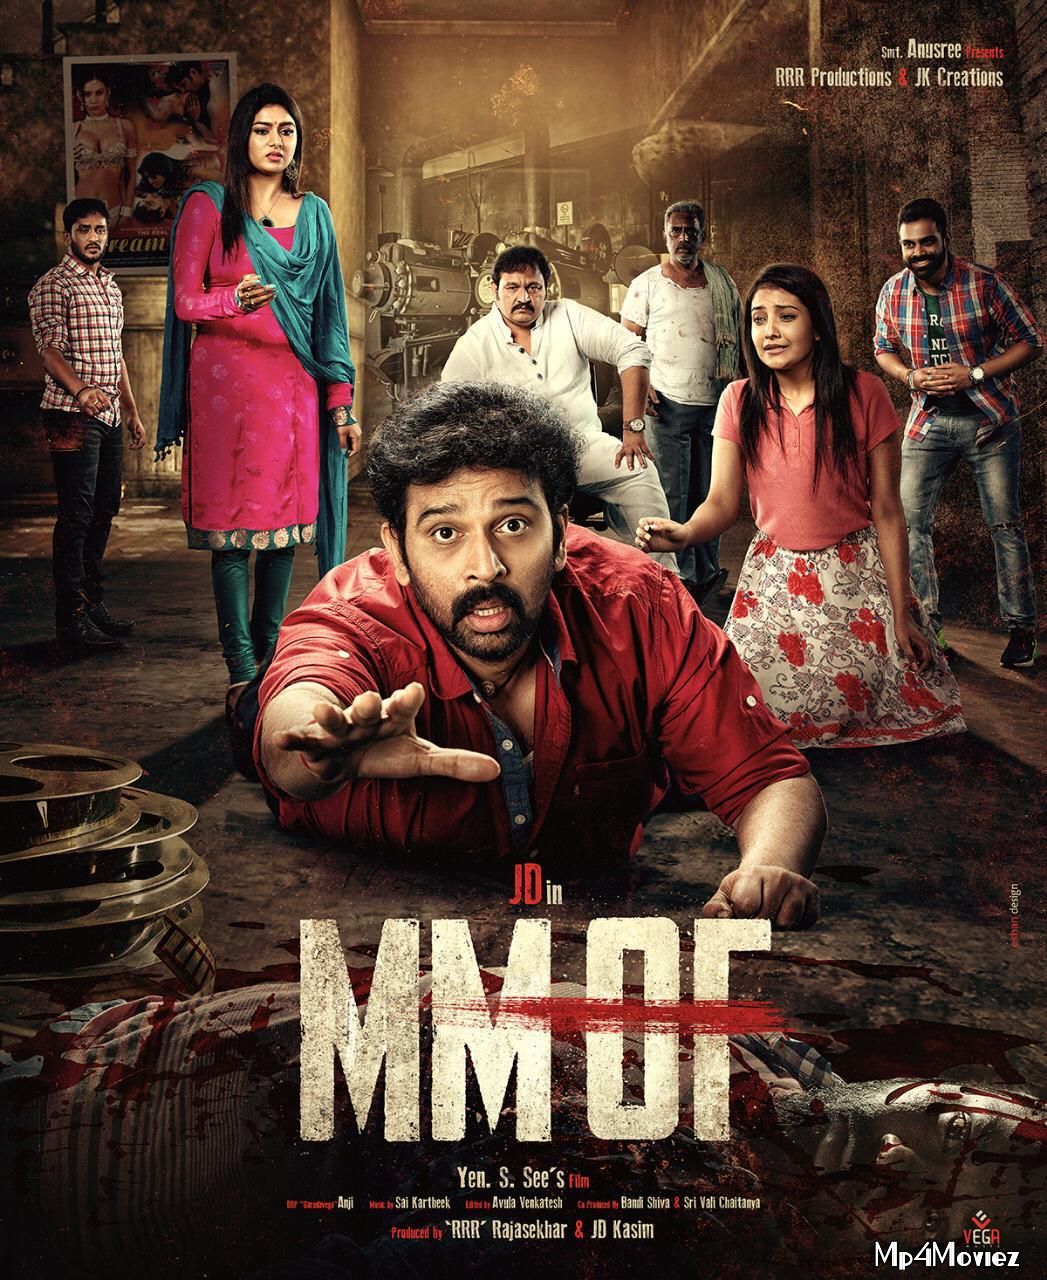 MMOF (2021) Hindi Dubbed (FanDub) HDRip download full movie